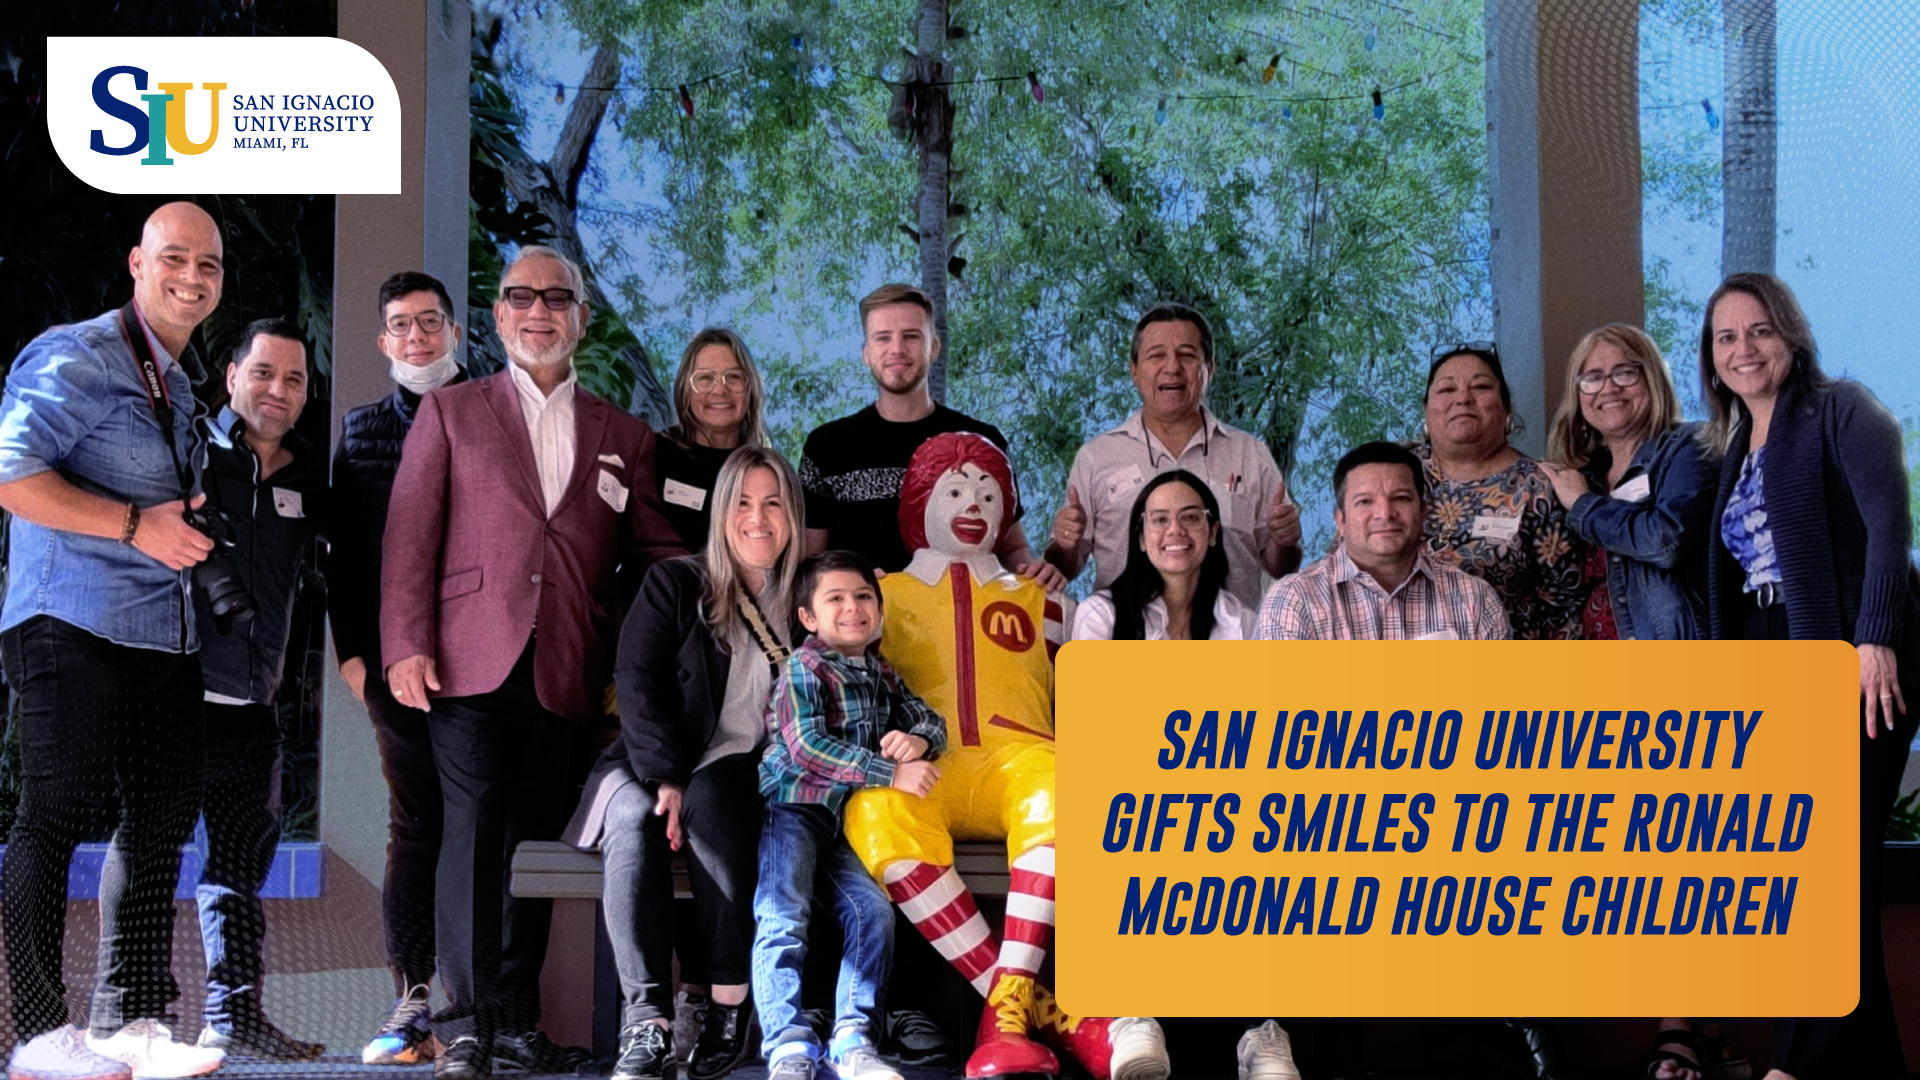 San Ignacio University gifts smiles to Ronald McDonald House’s hospitalized children in South Florida.